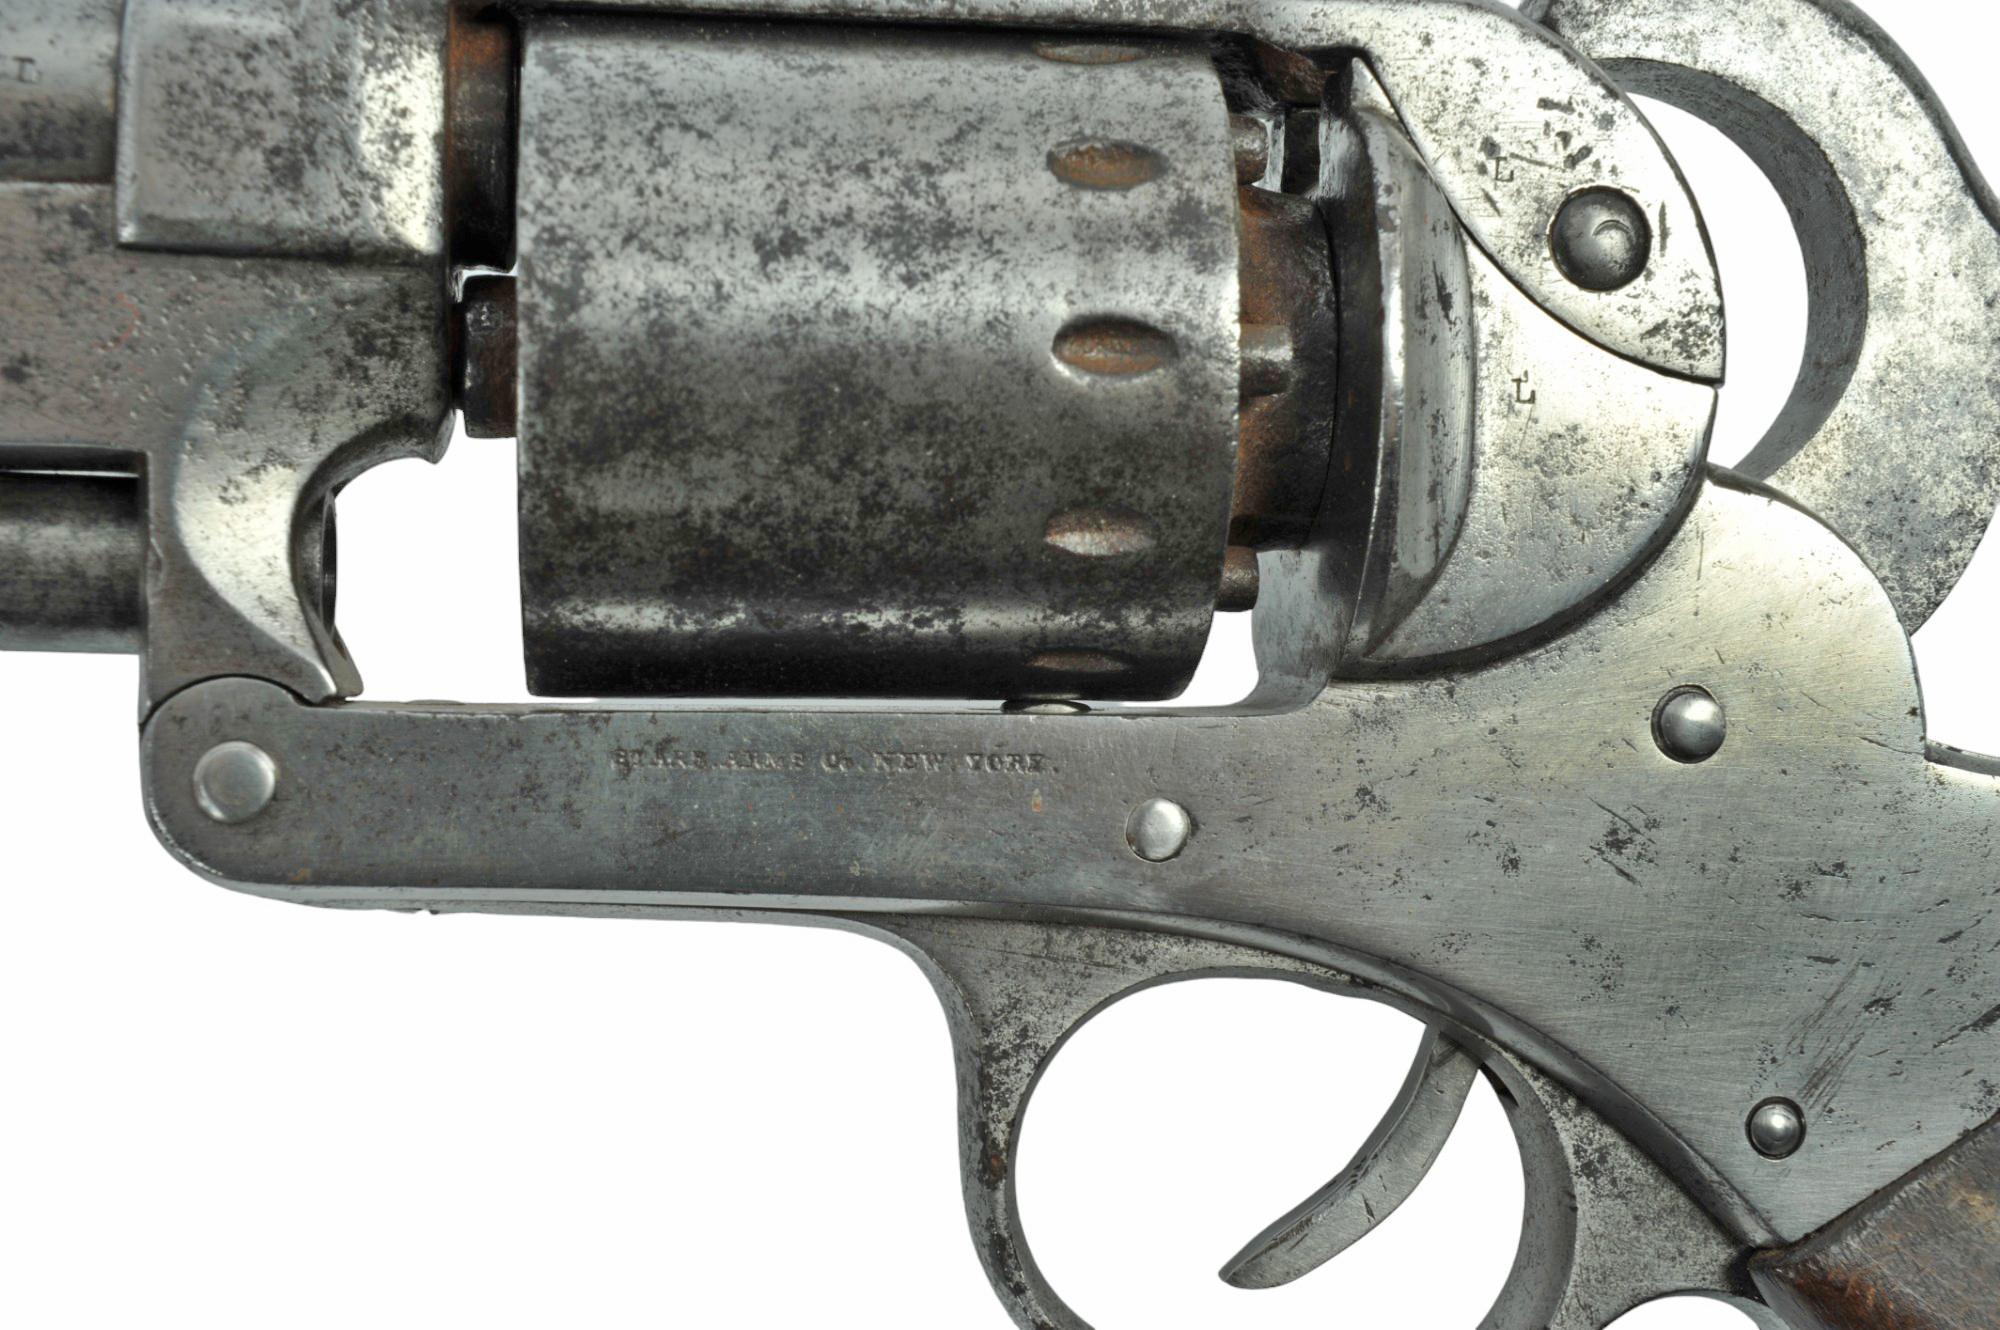 Civil War era Starr M1858 .44 Caliber Double-Action Percussion Revolver (A1)